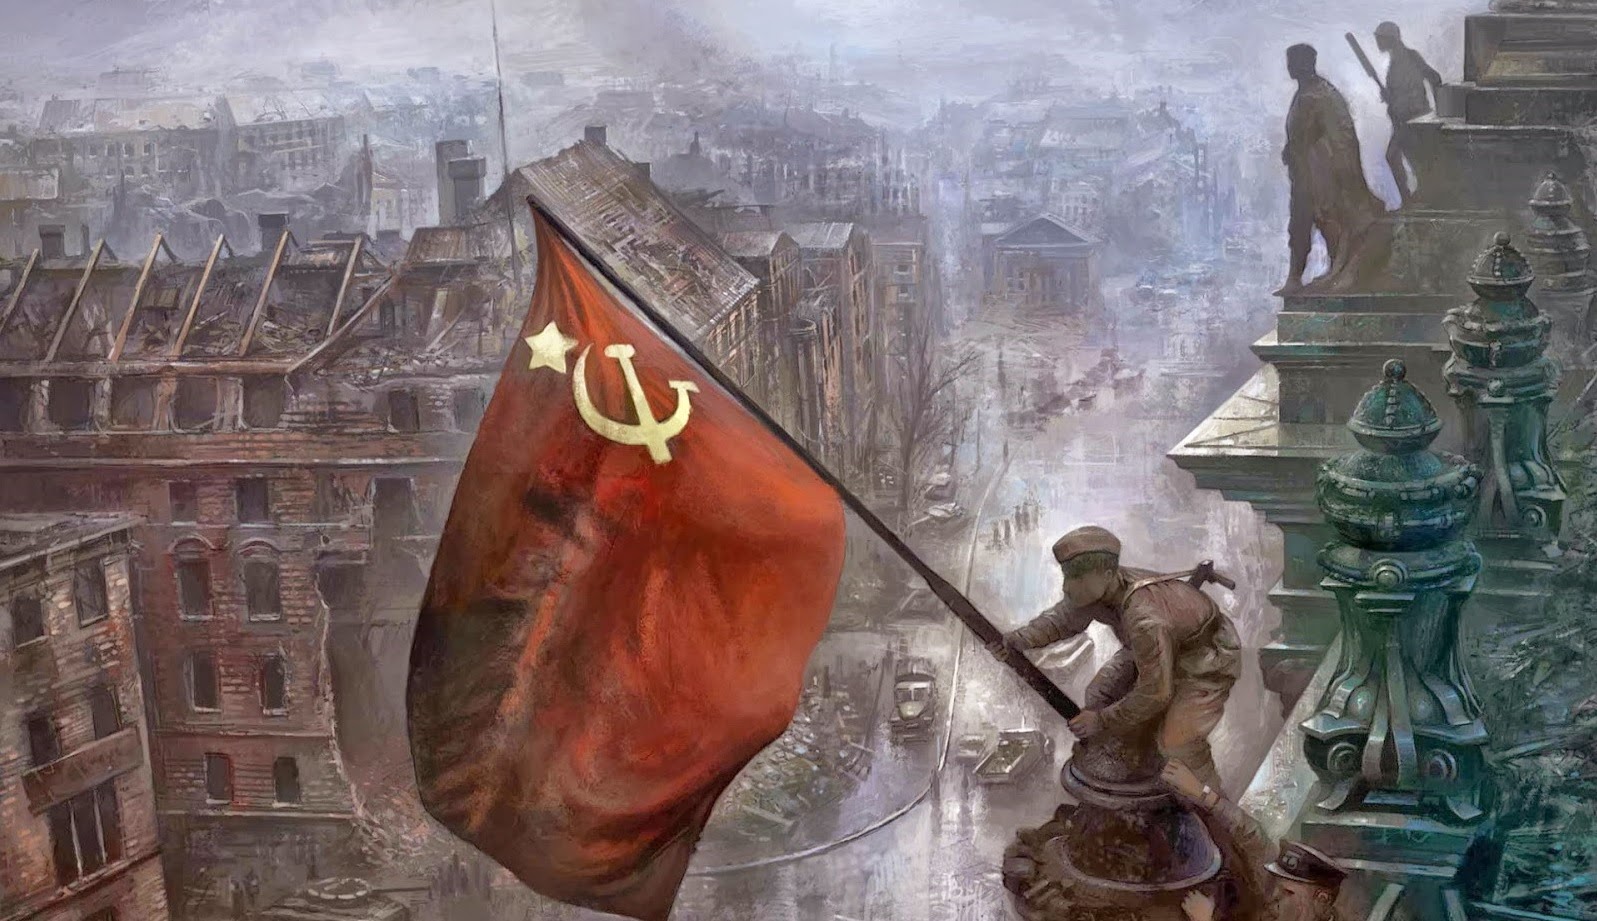 World War II Soviet flag begins to appear across parts of Ukraine